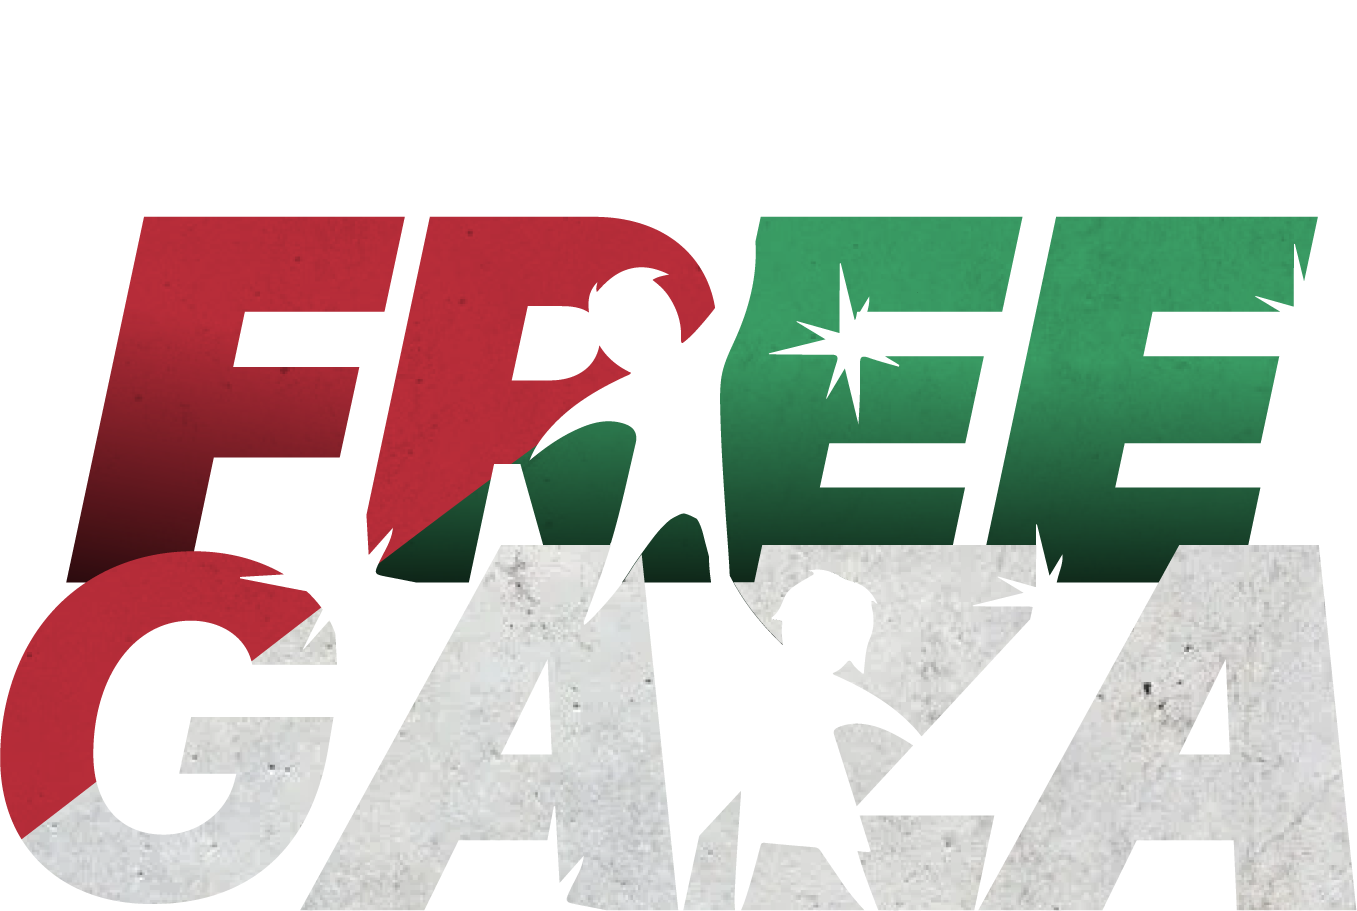 FreeGaza